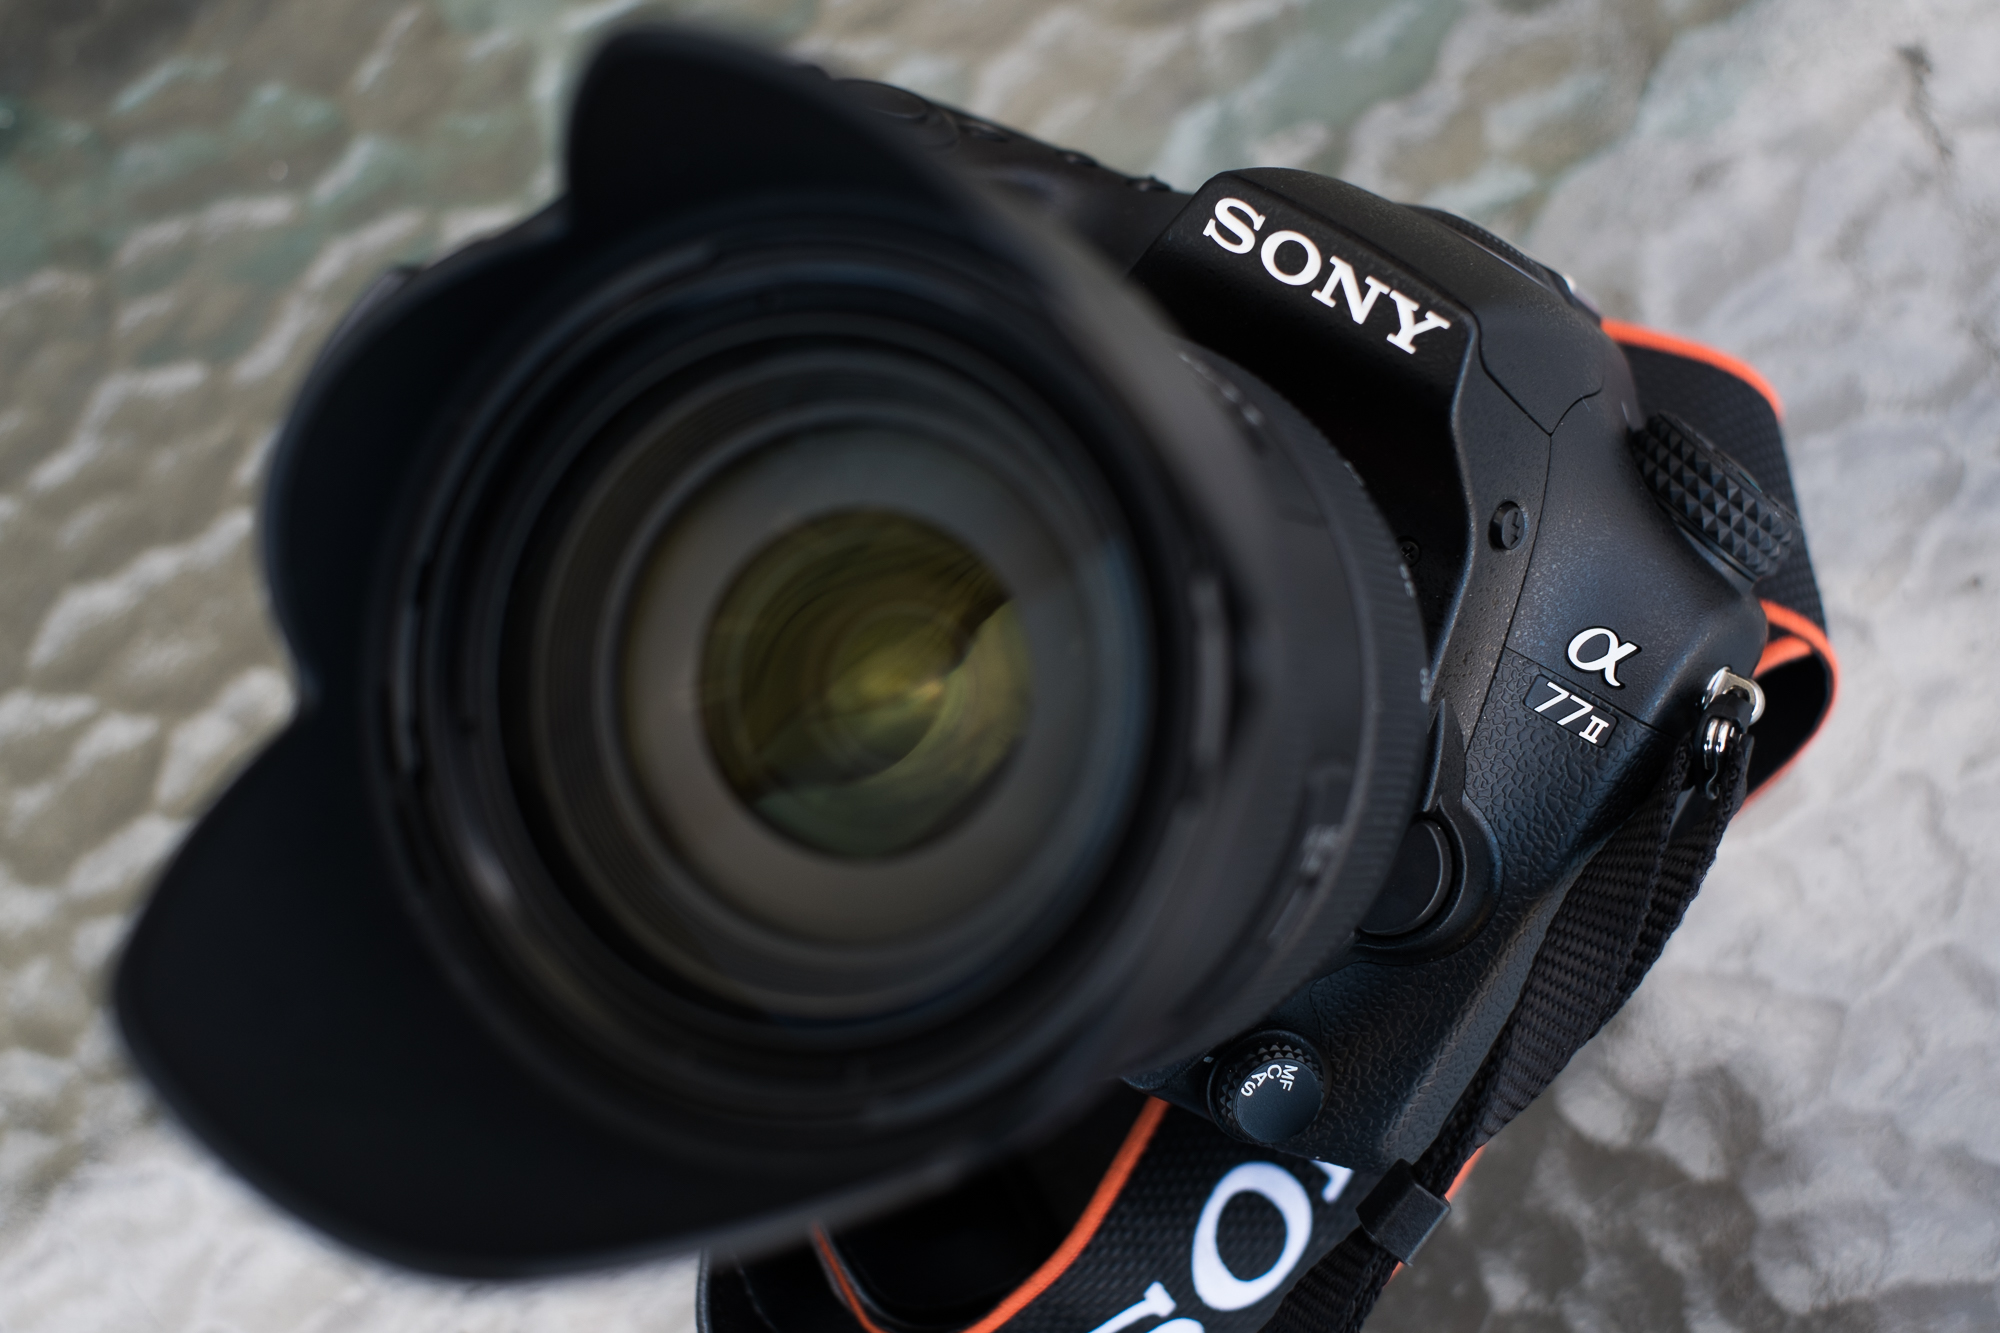  Sony A77II Digital SLR Camera - Body Only : Electronics